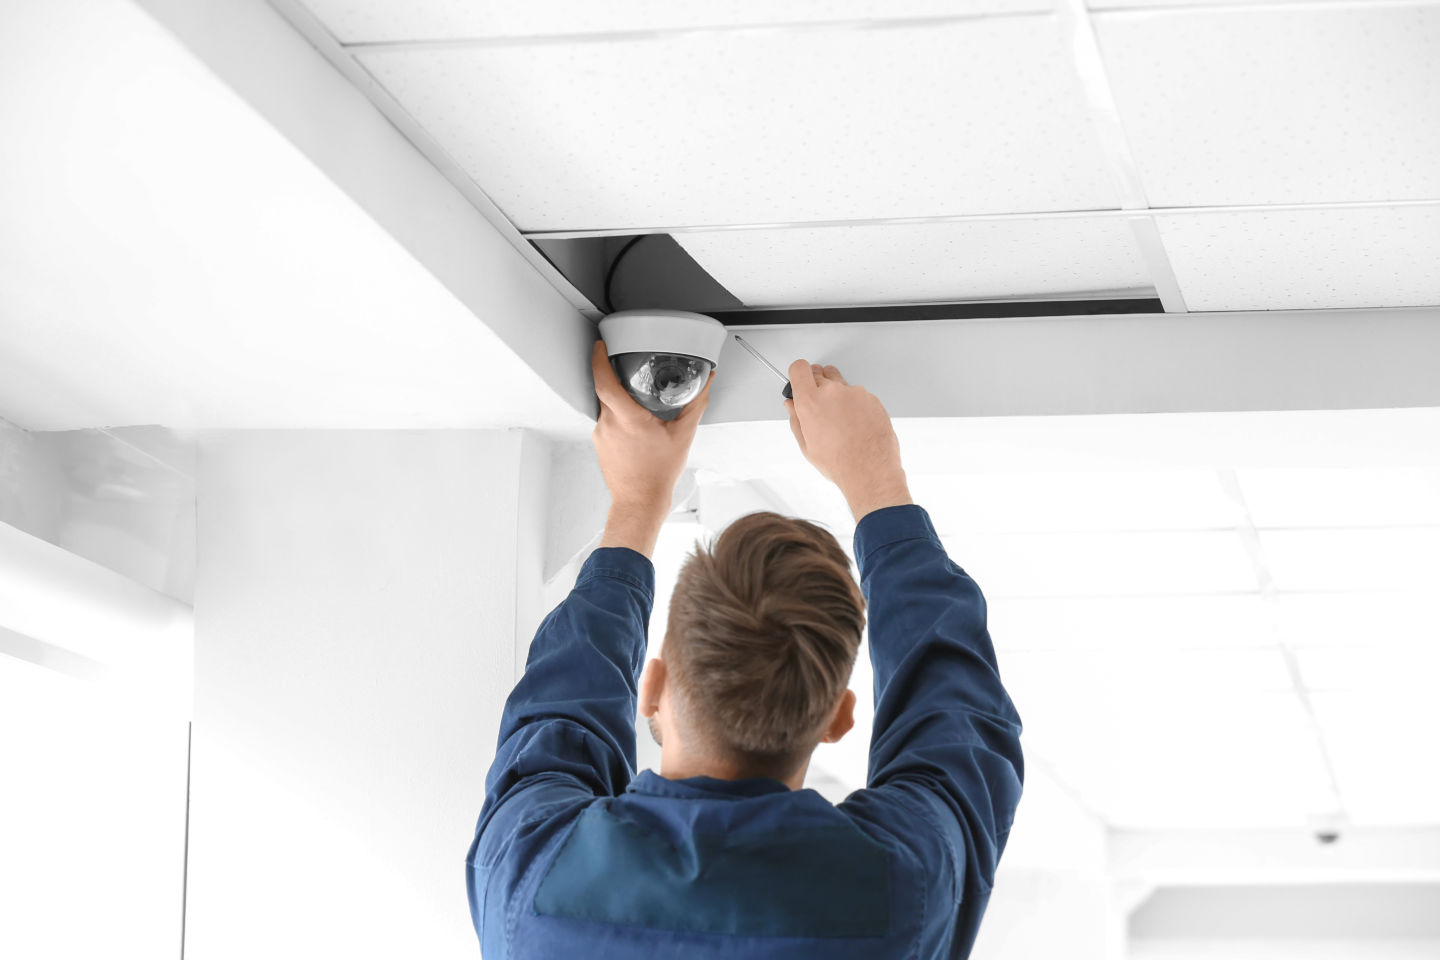 Technician installing CCTV camera on ceiling indoors